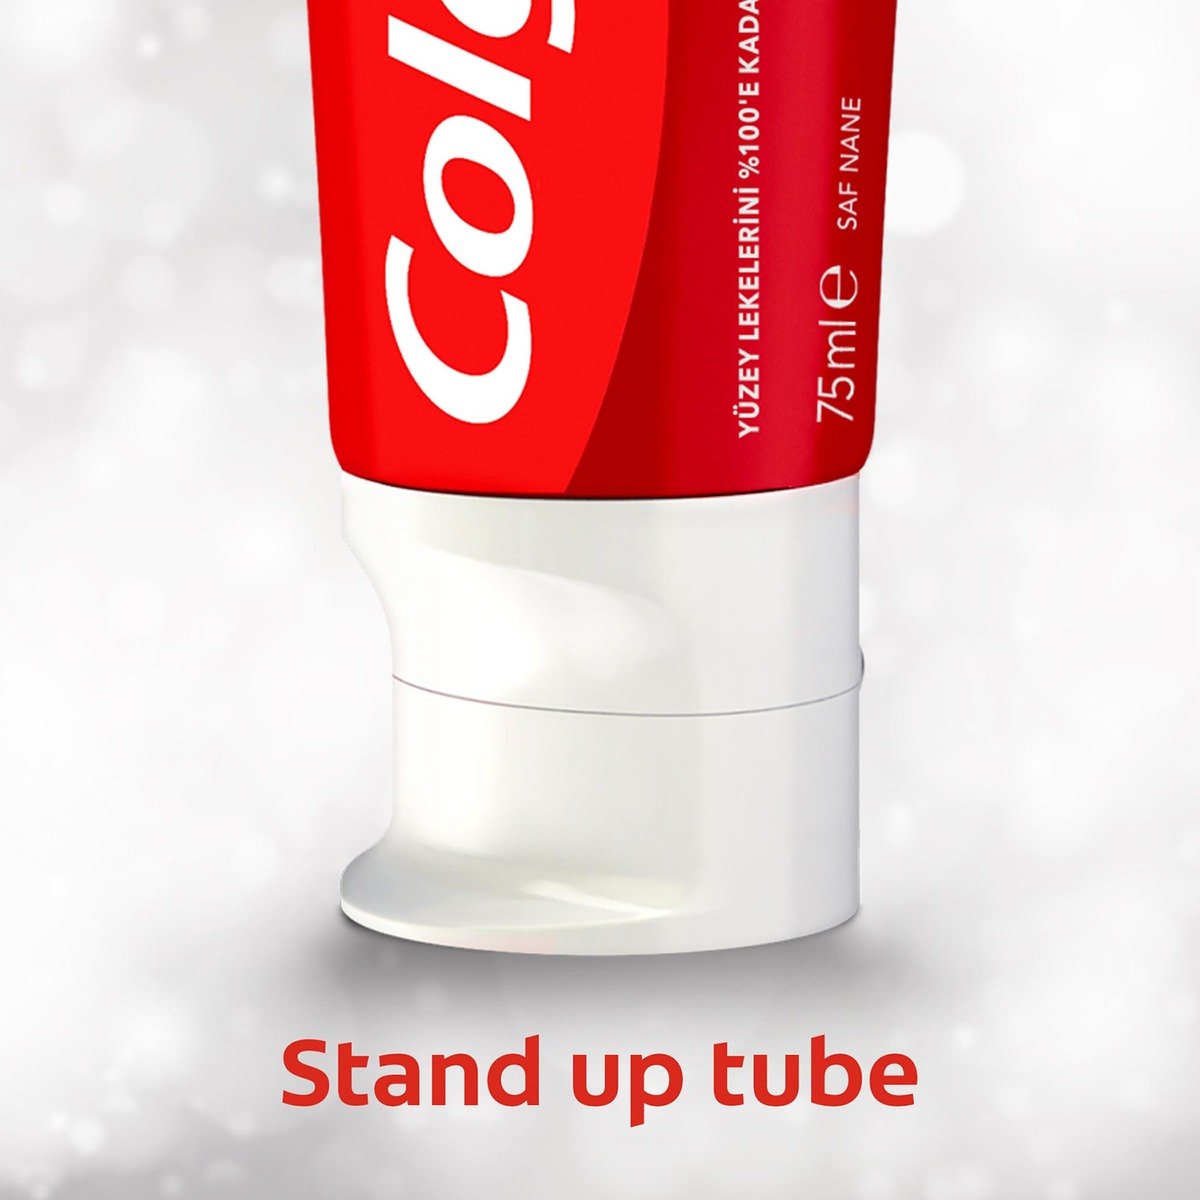 Colgate Toothpaste Optic White Expert 75ml